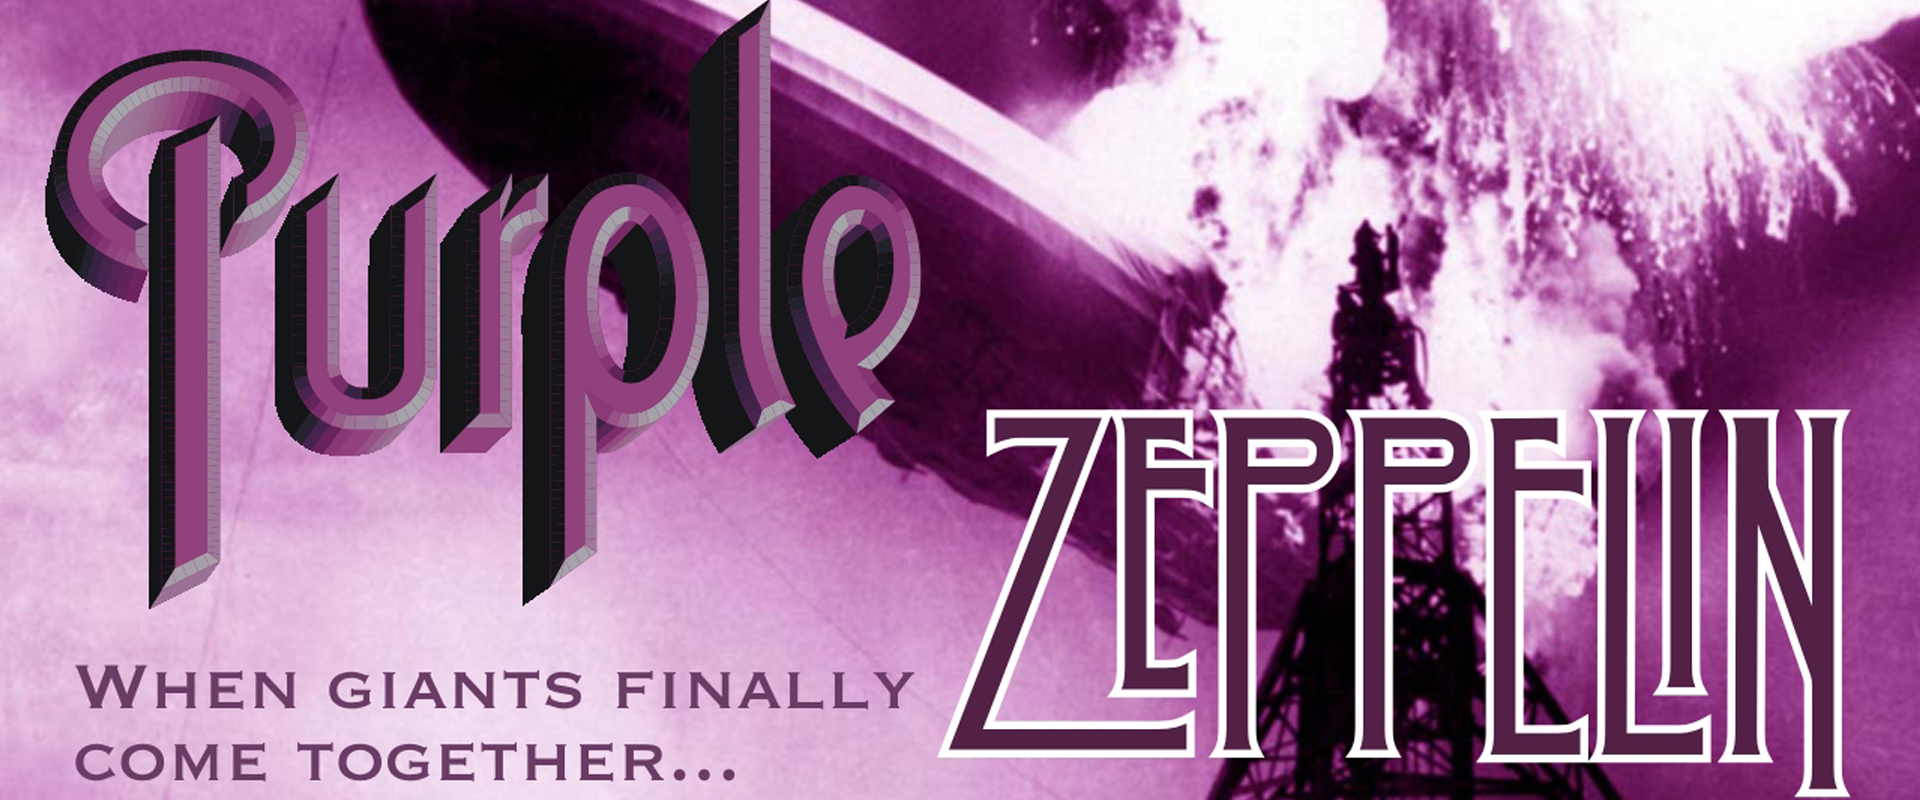 The Purple Zeppelin Show